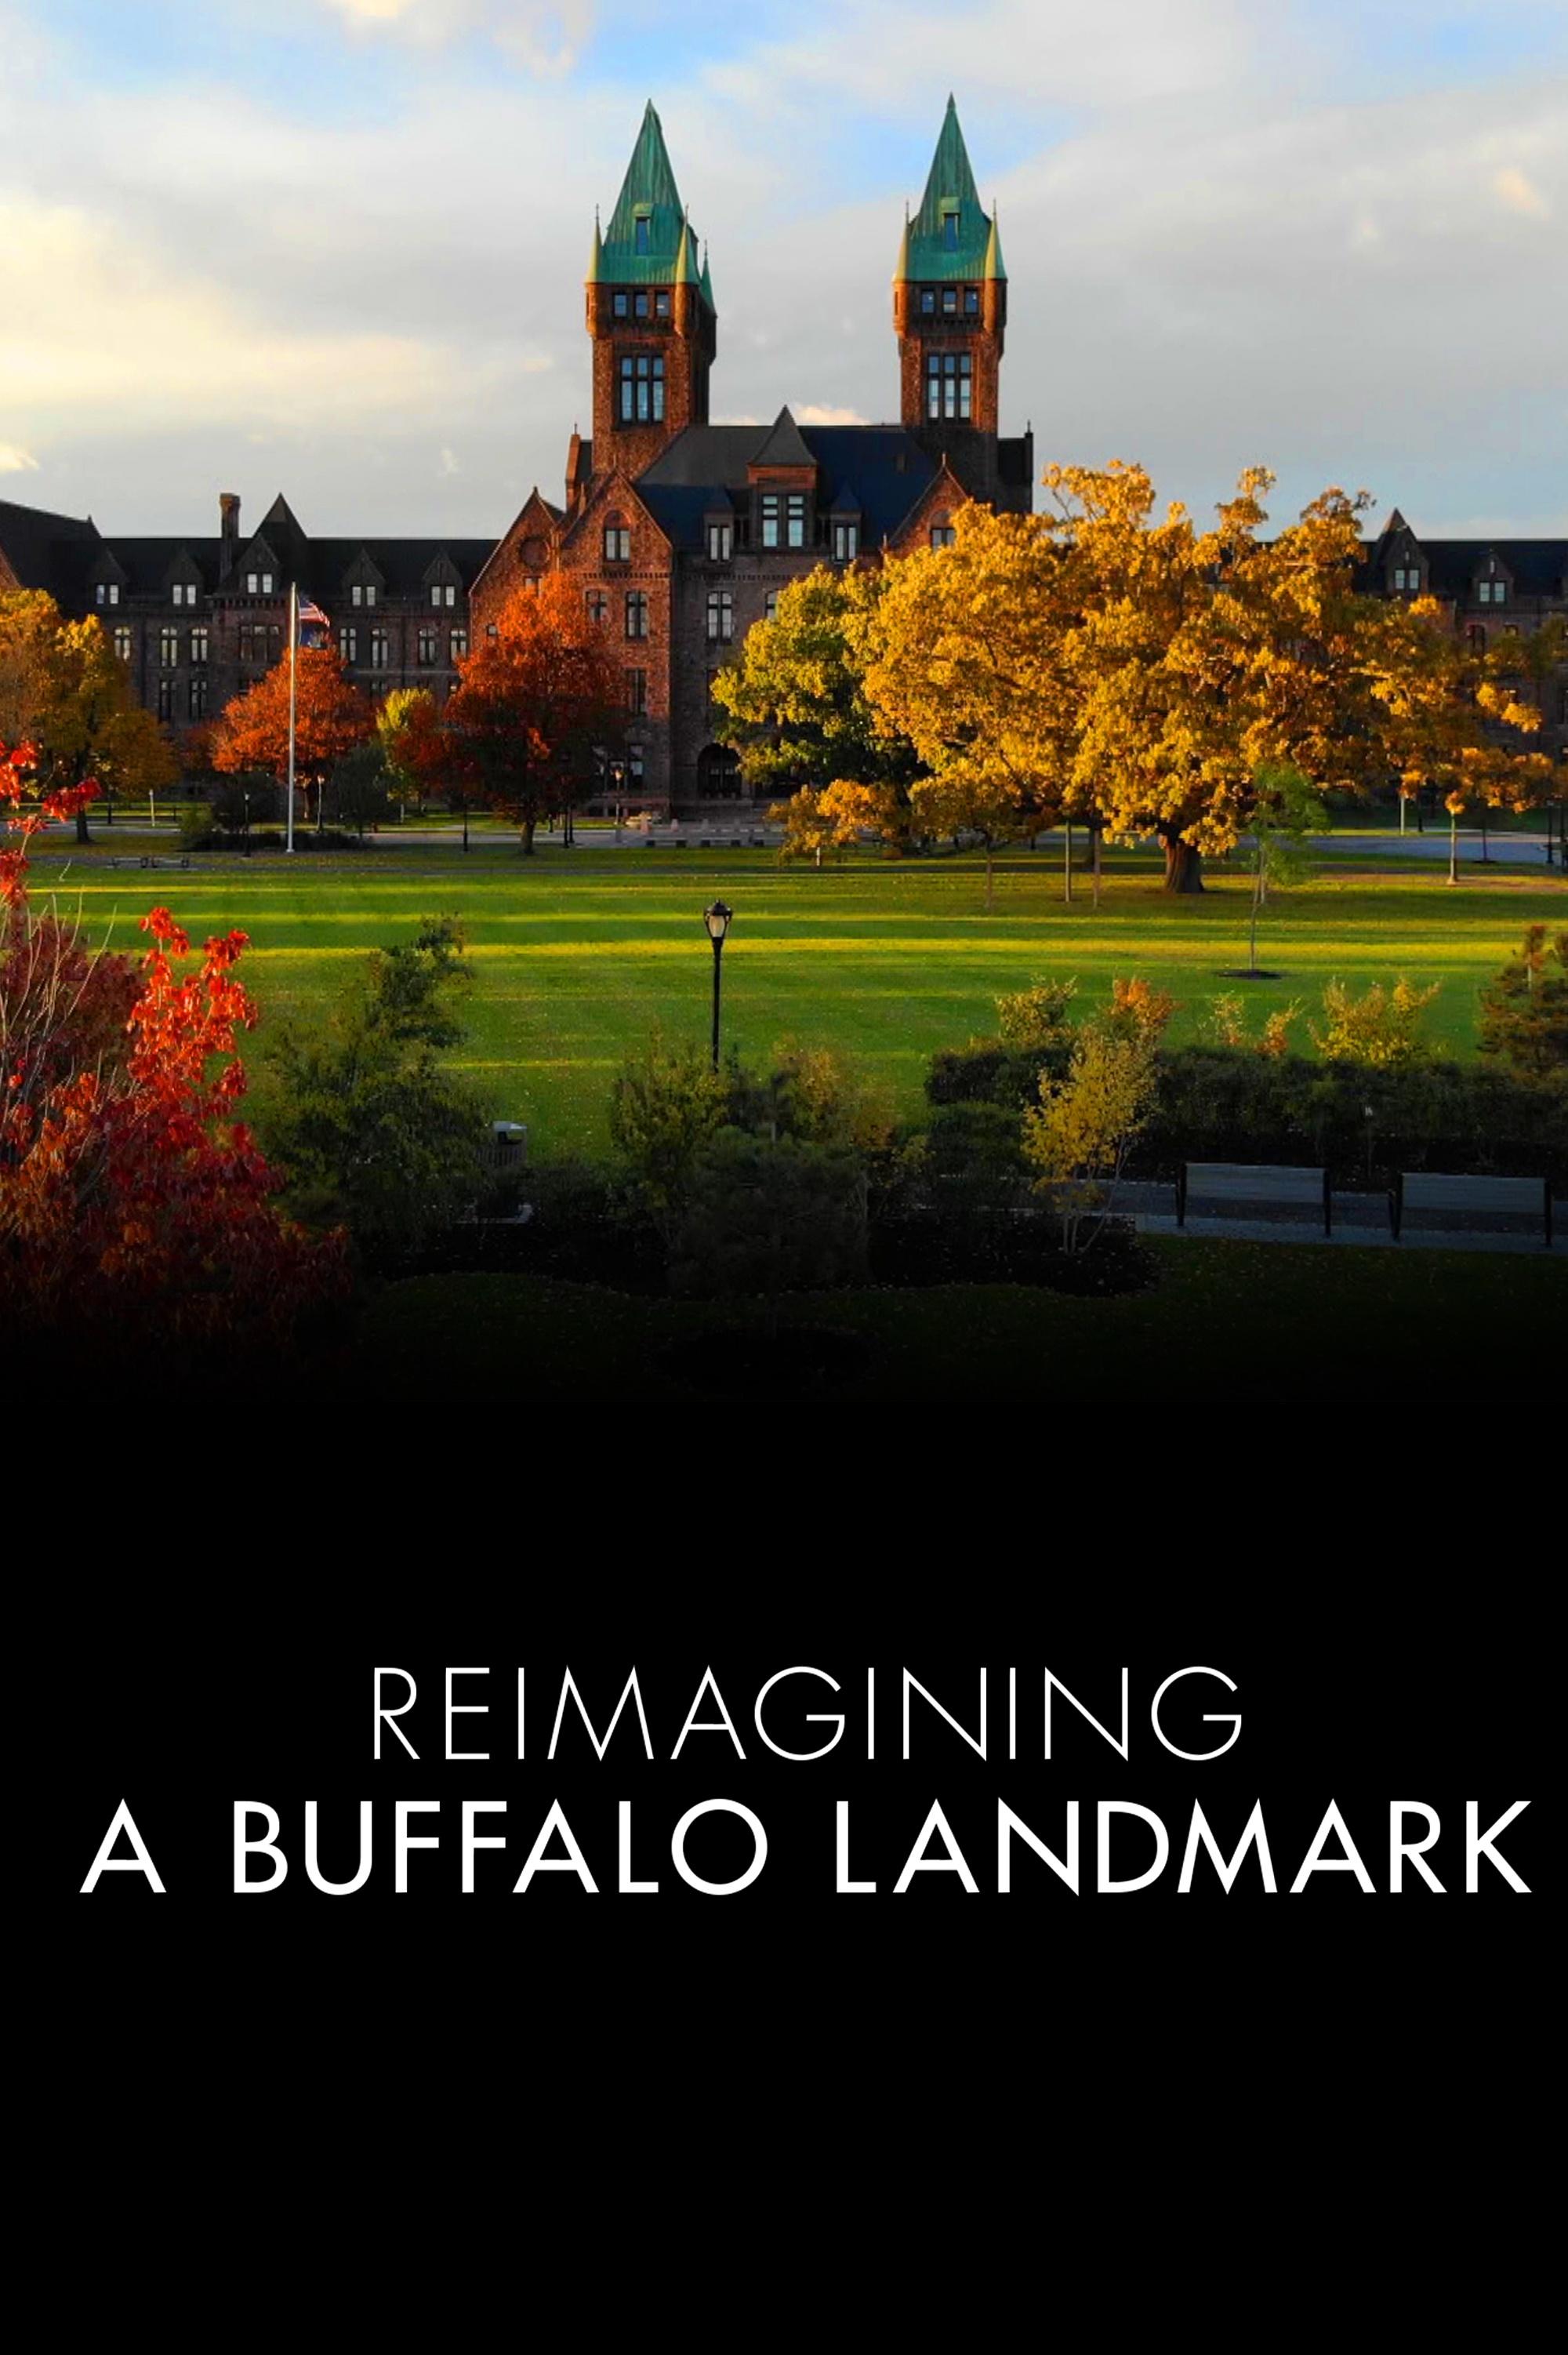 Reimagining A Buffalo Landmark Premieres April 12